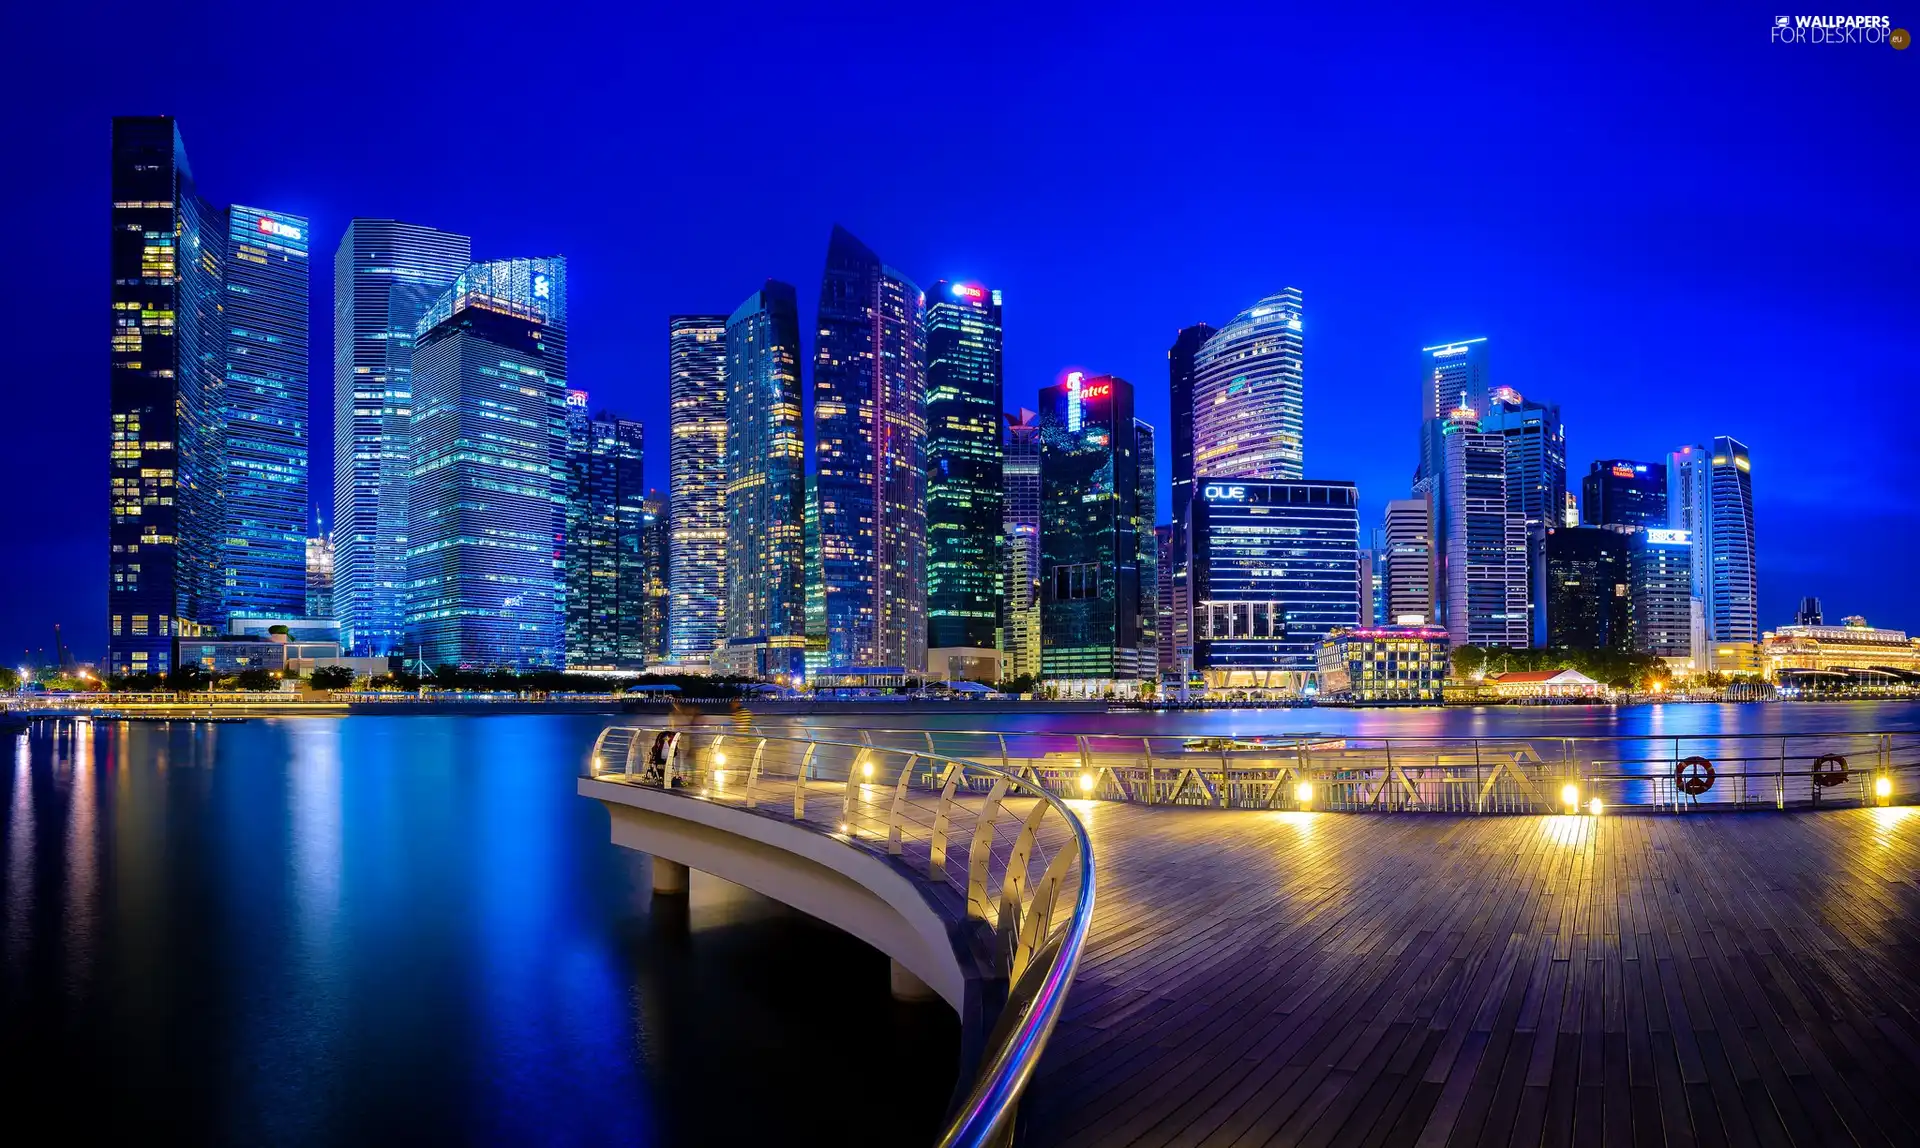 Singapur, Platform, City at Night, skyscrapers